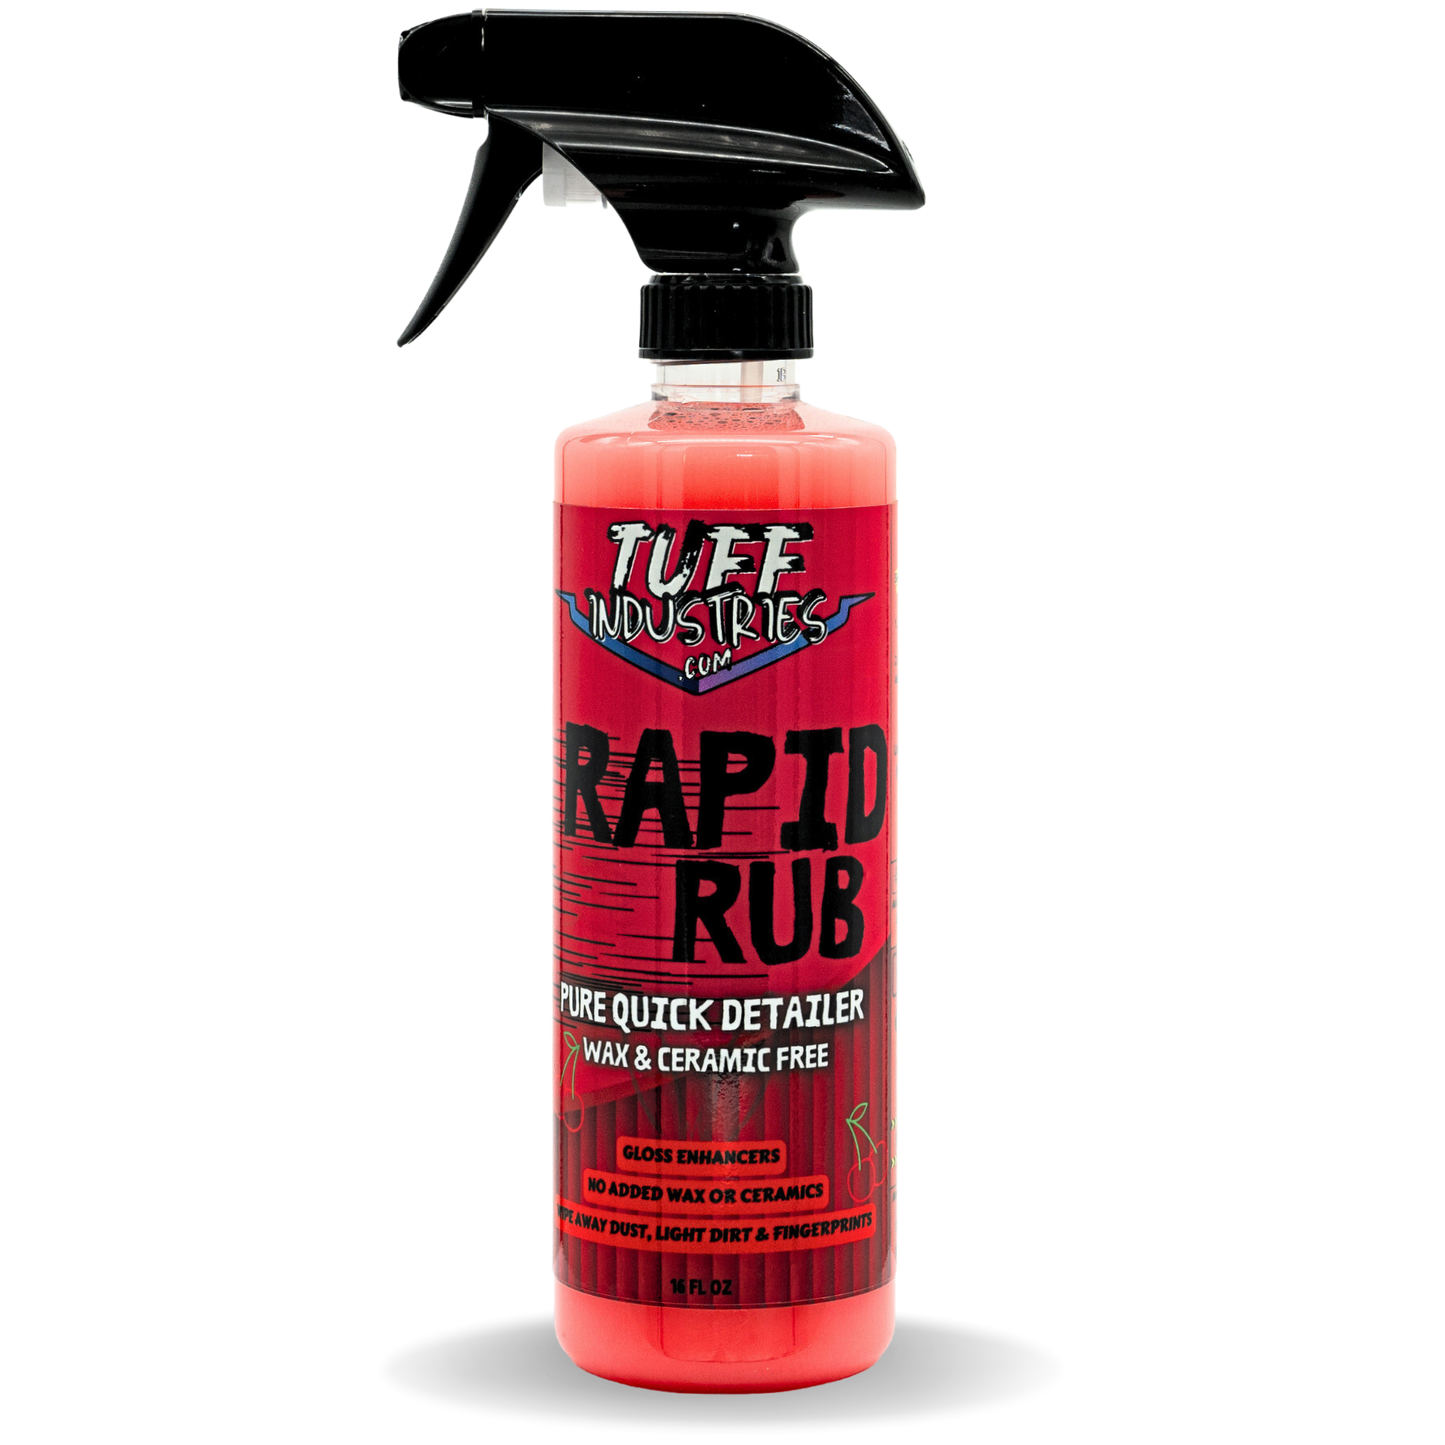 Rapid Rub - Pure Quick Detailer (wax & ceramic free)